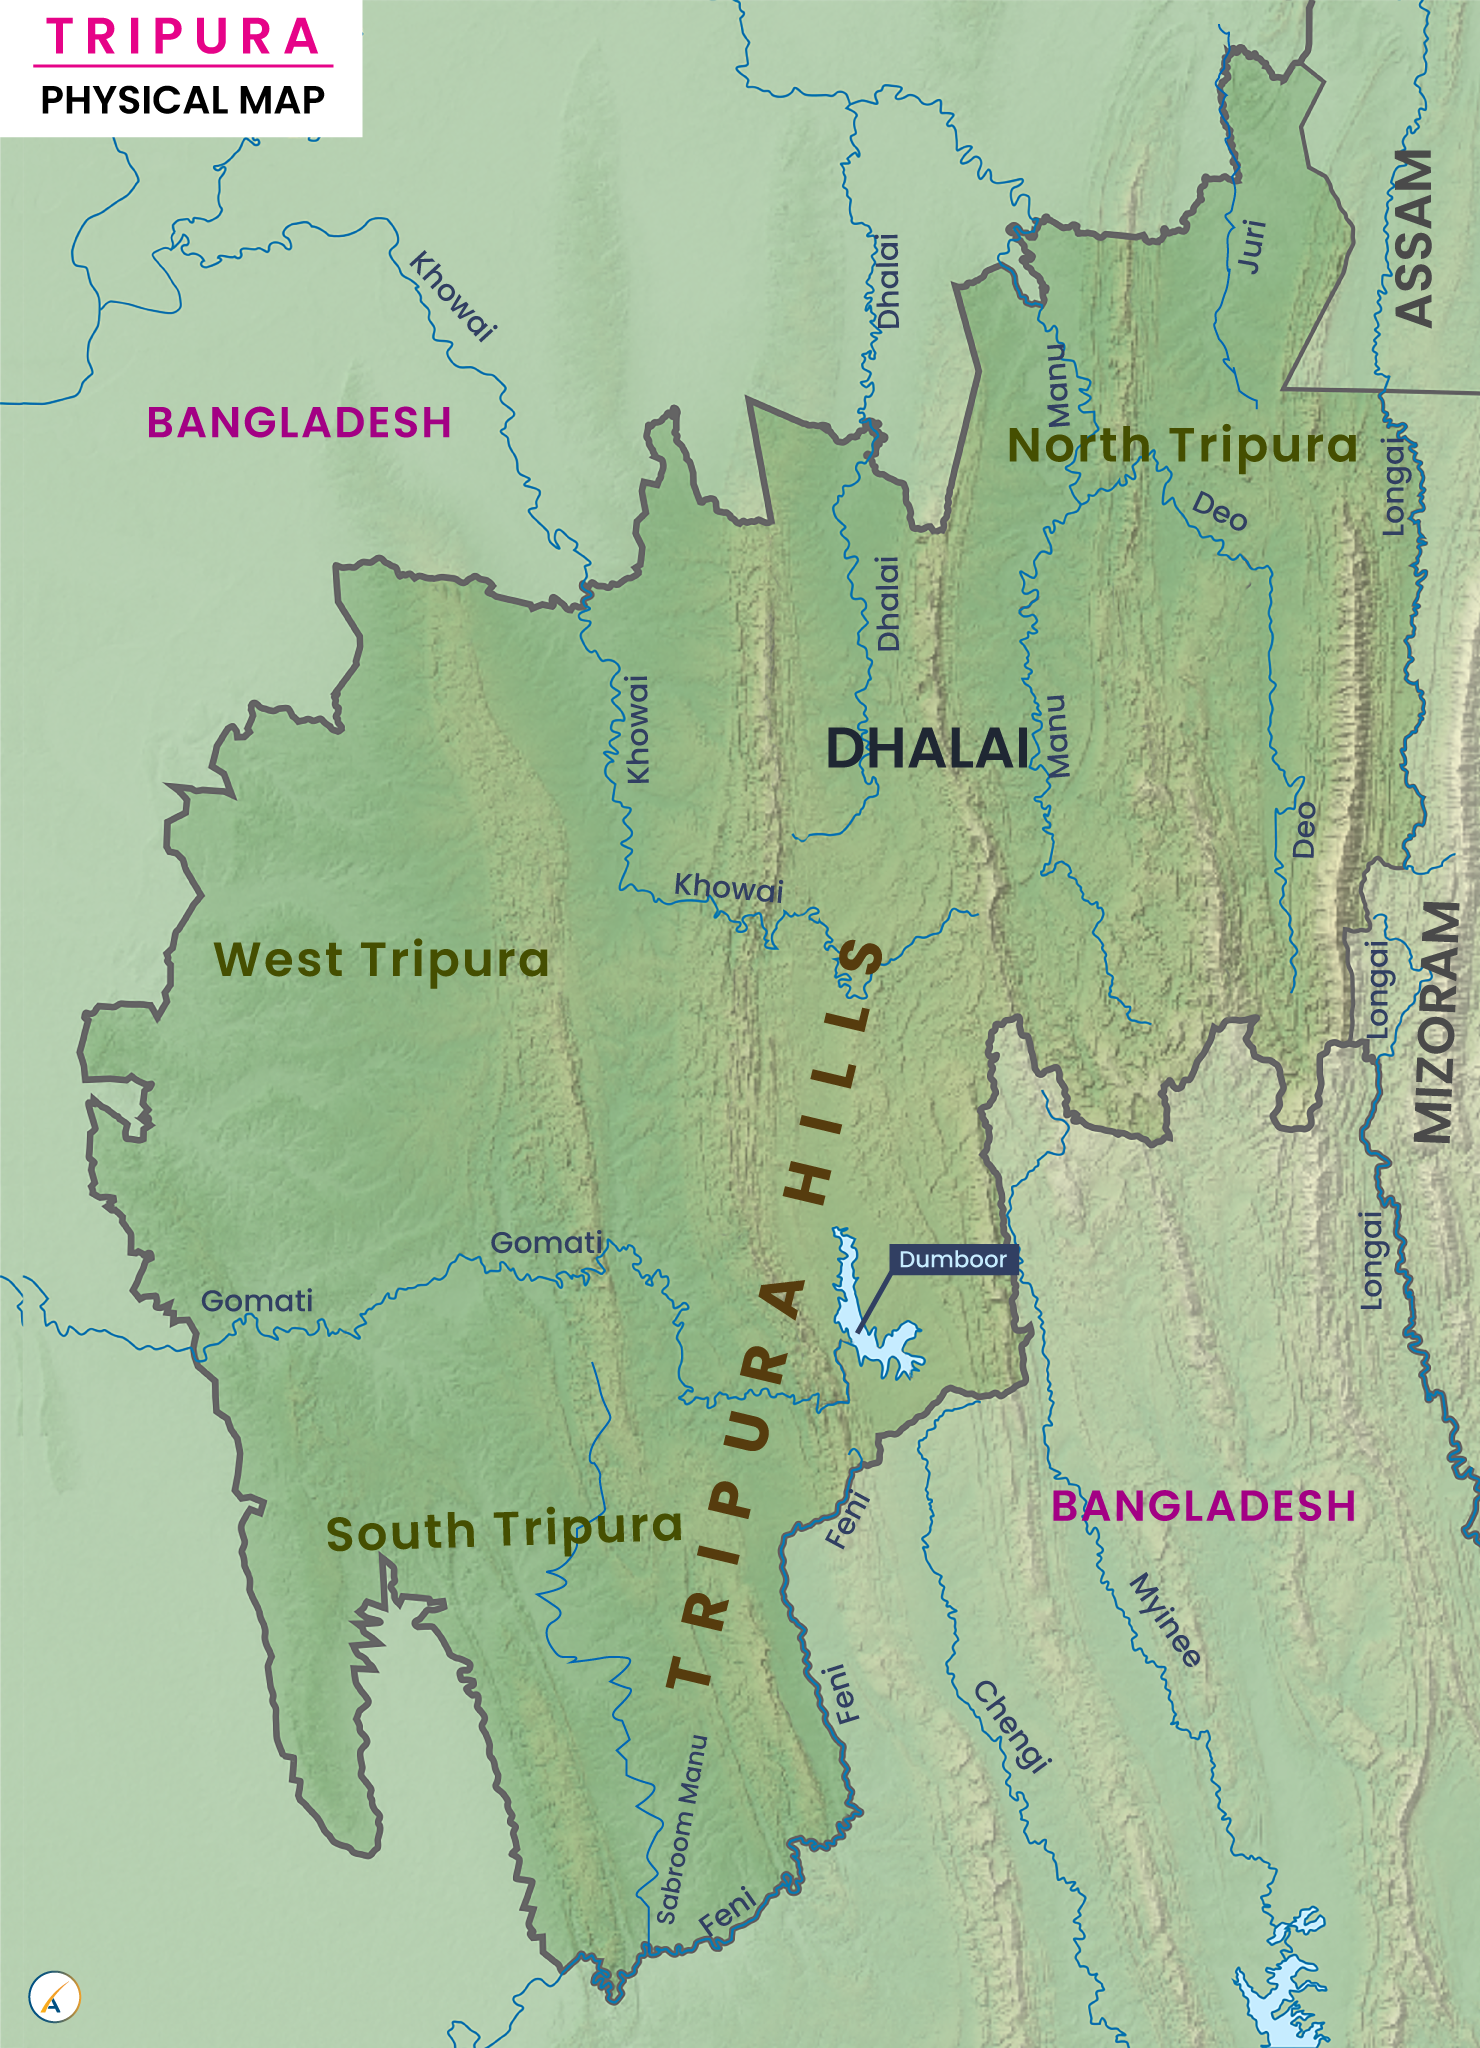 Tripura Physical Map